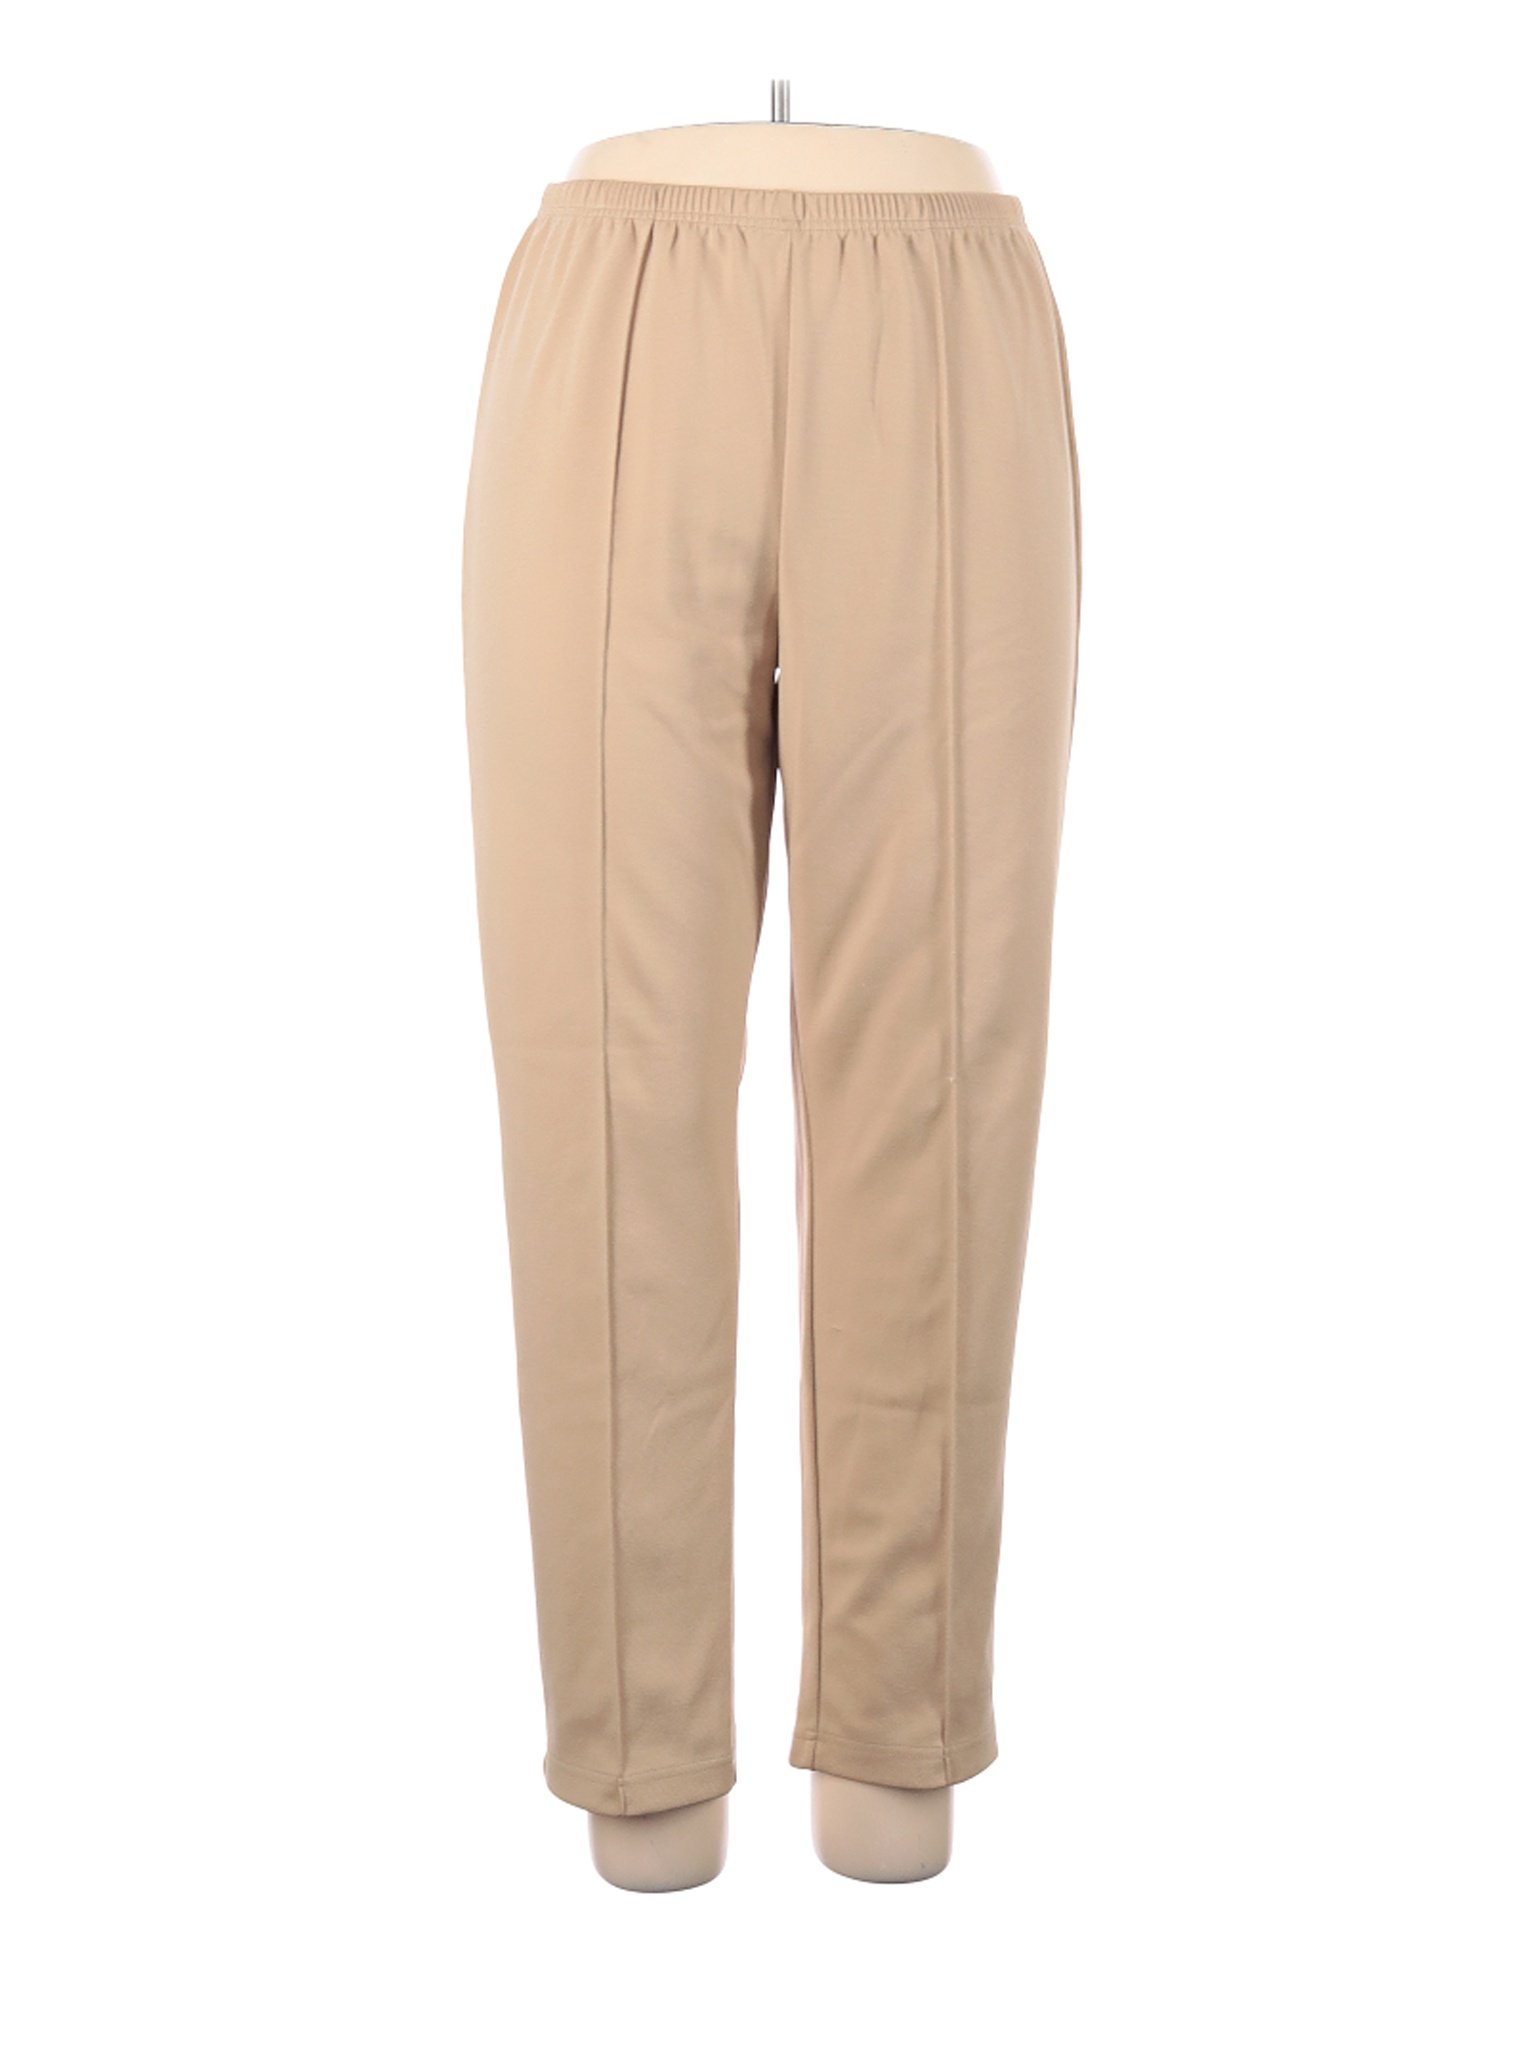 Only Necessities Women Brown Casual Pants 16 | eBay